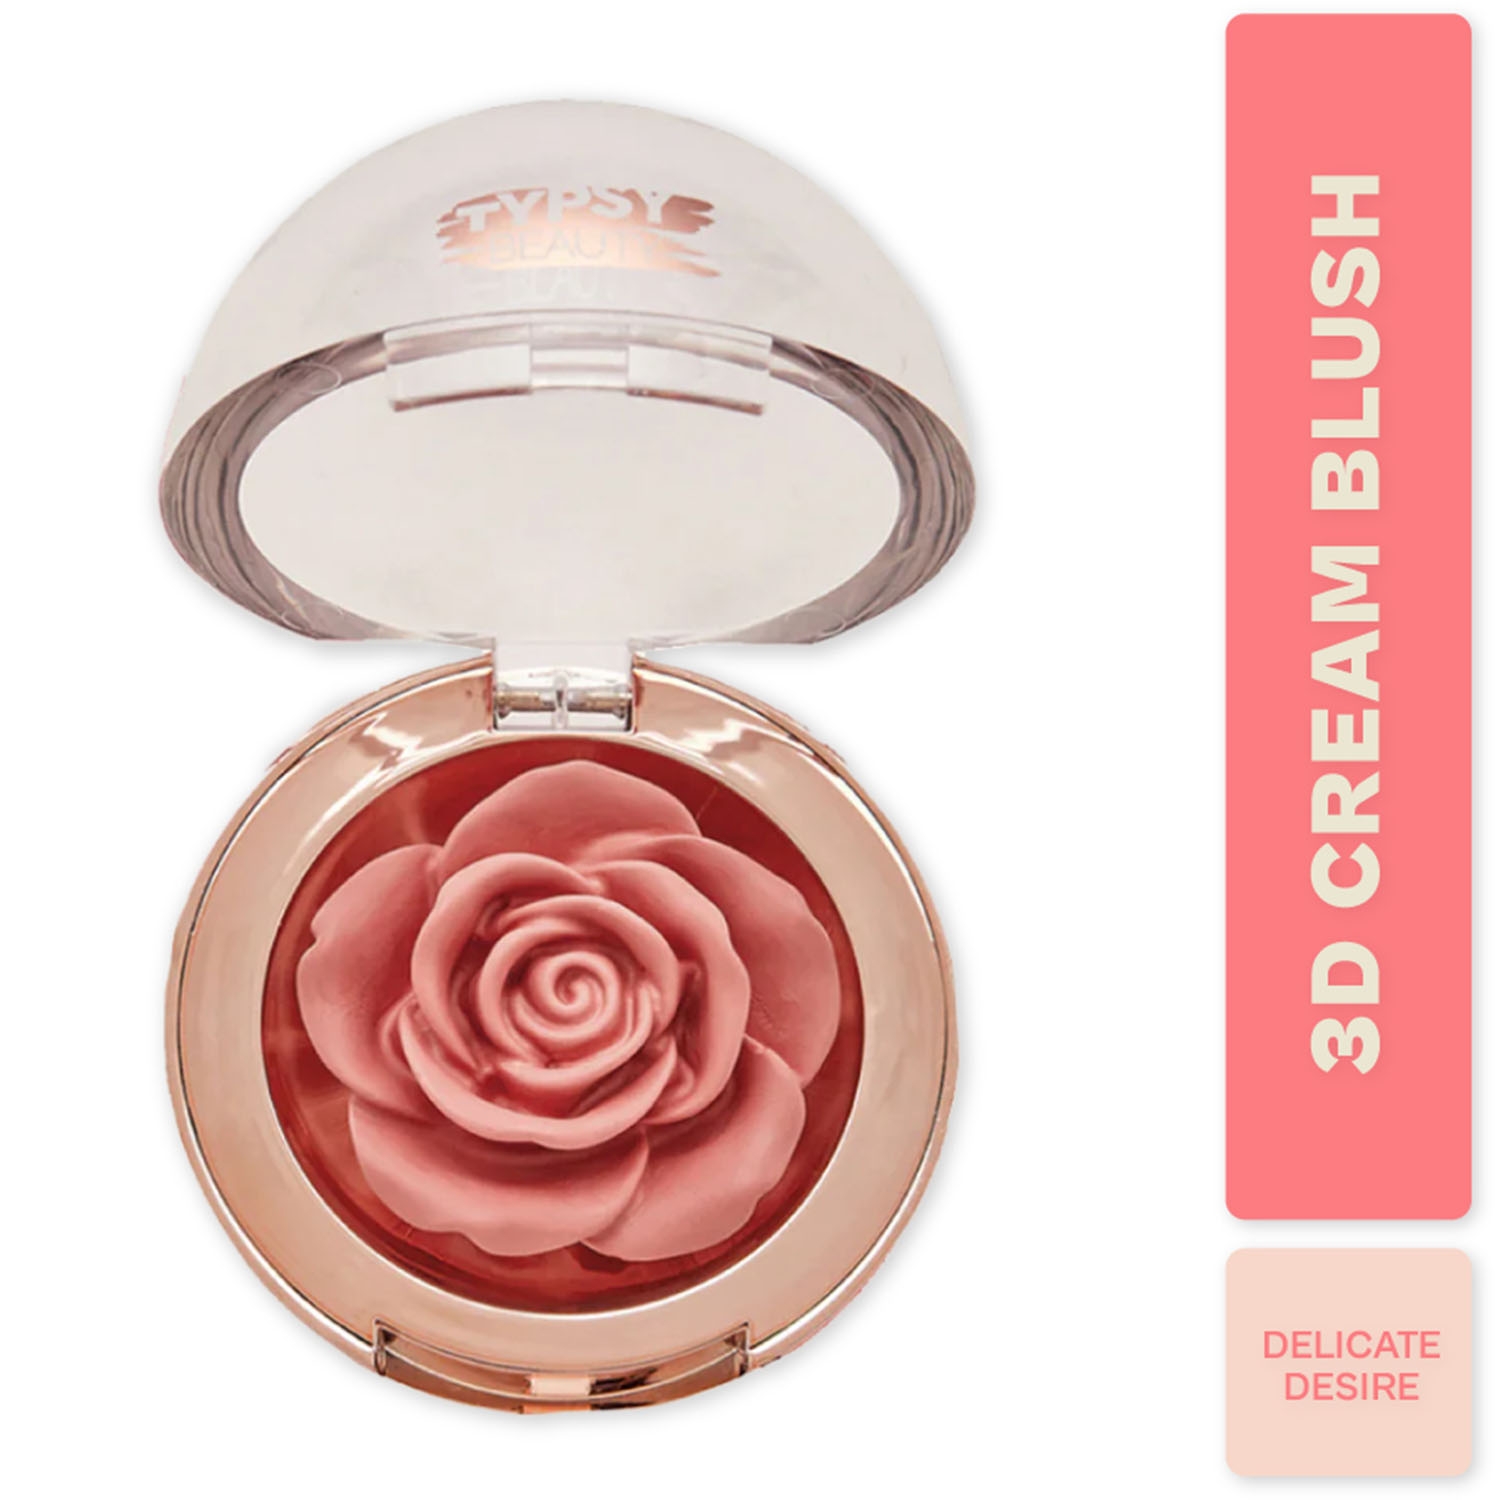 Typsy Beauty Enchanted Garden 3D Rose Blush - Delicate Desire (4.8g)